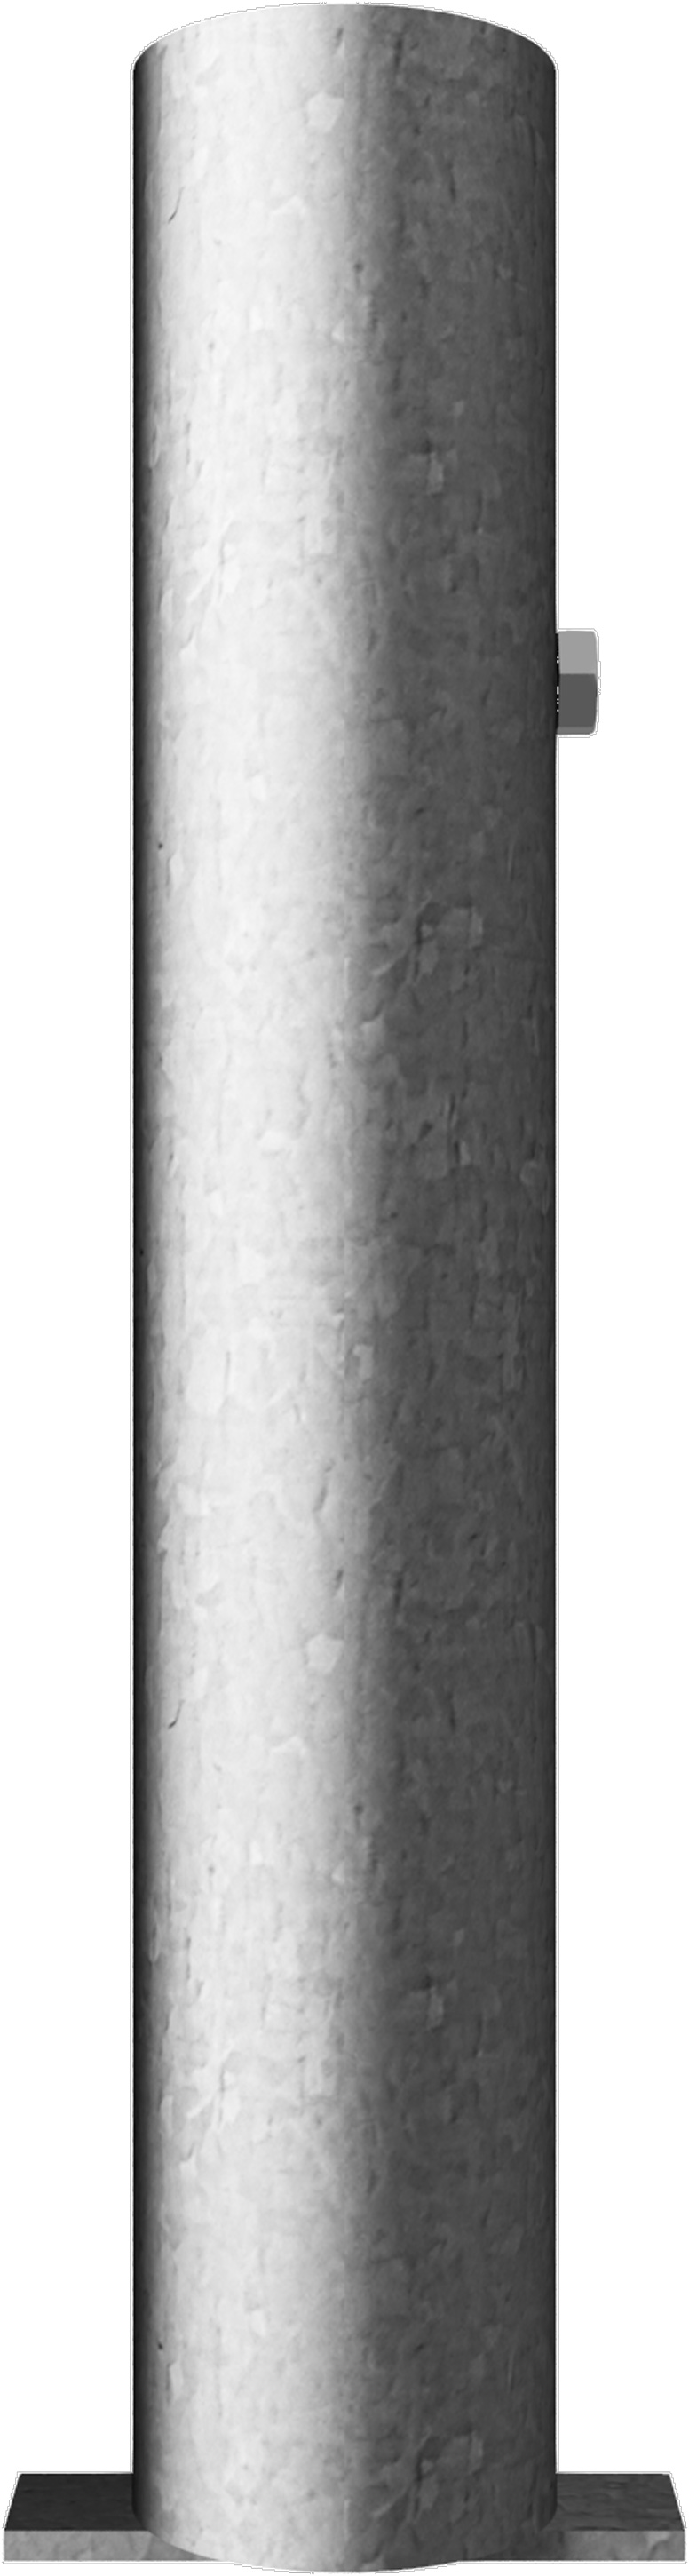 Schake Bodenhülse für Ø 60 mm herausnehmbare Pfosten